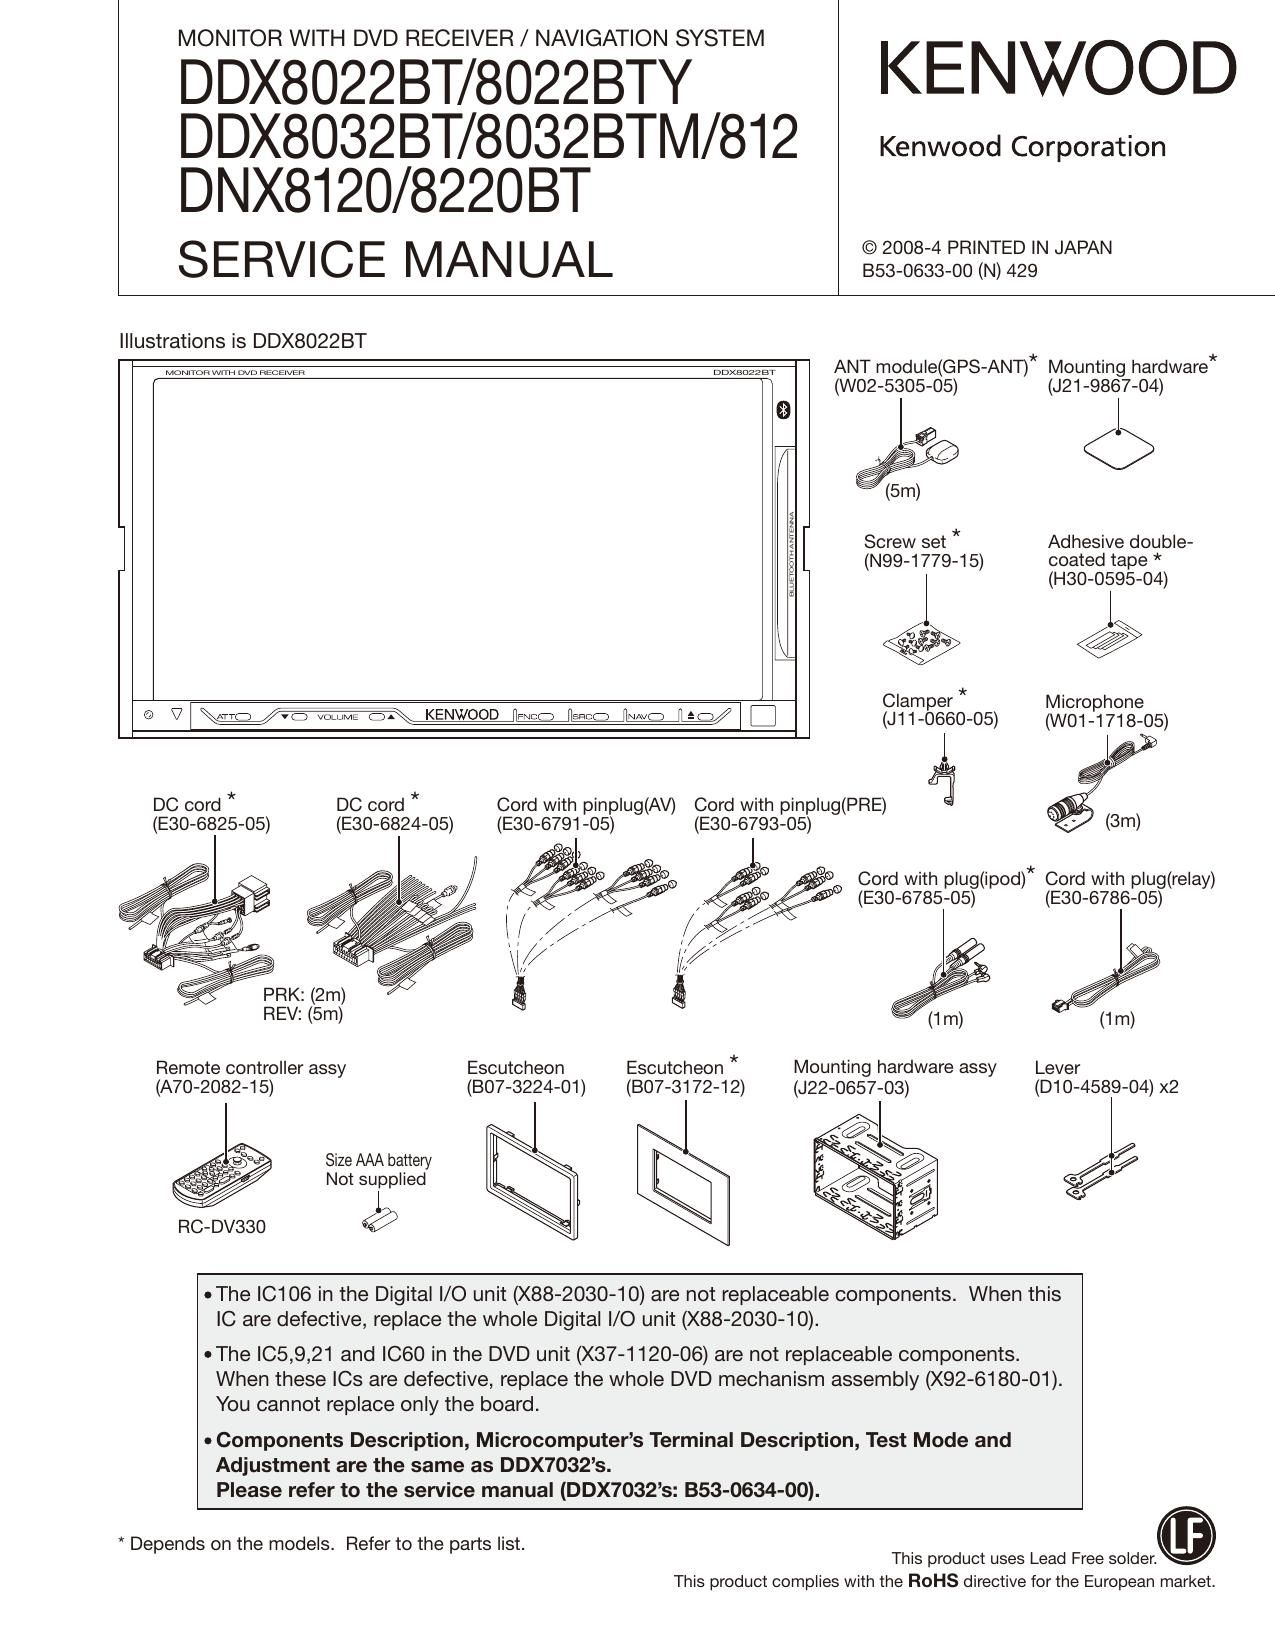 Kenwood DNX 8120 Service Manual